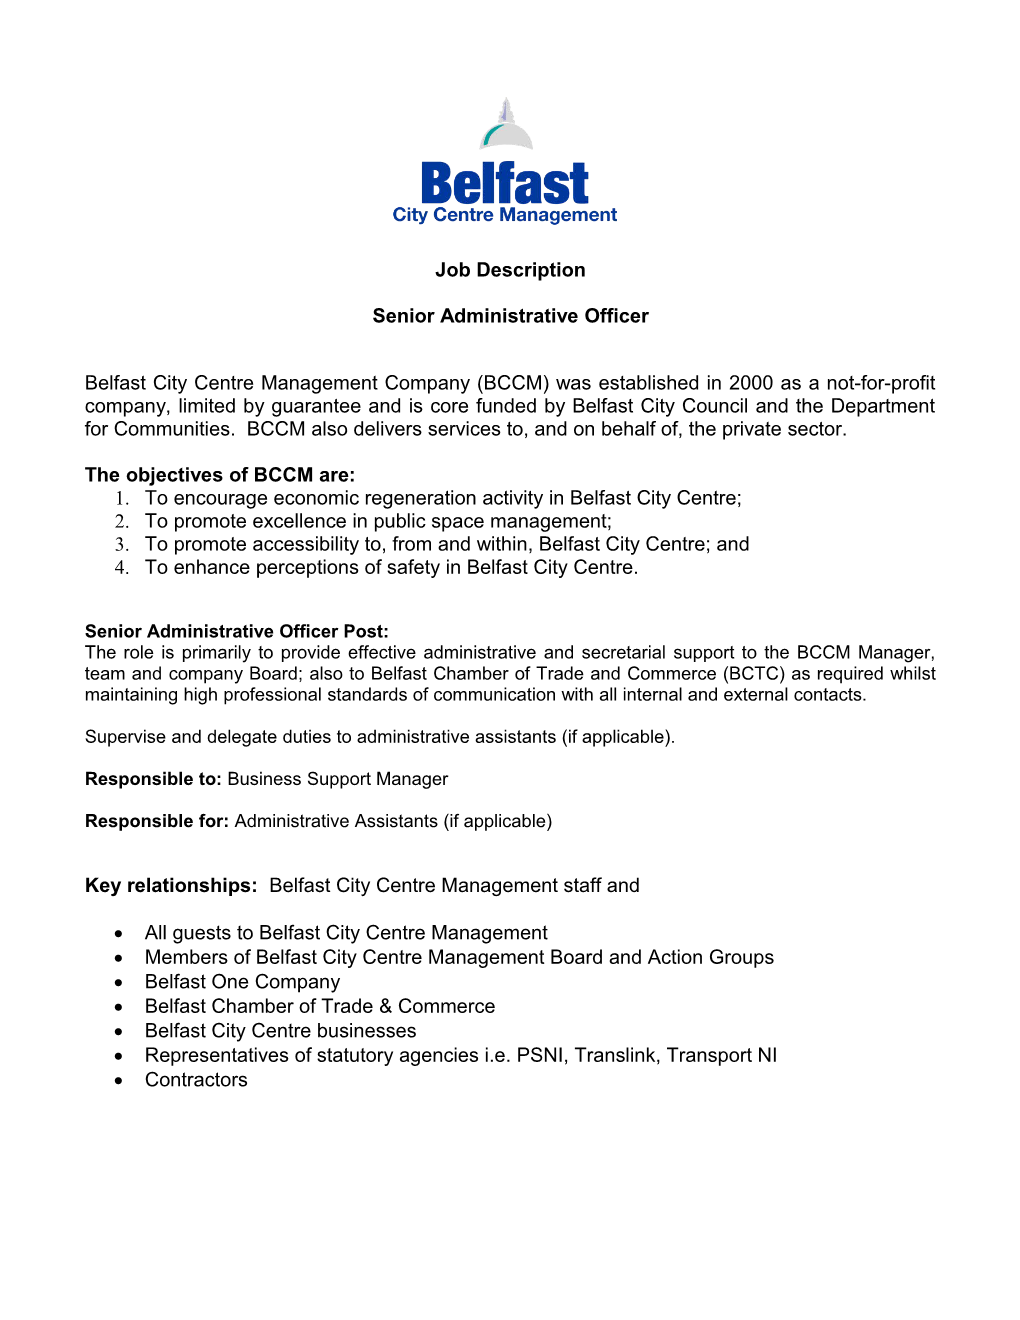 Belfast City Centre Management Company